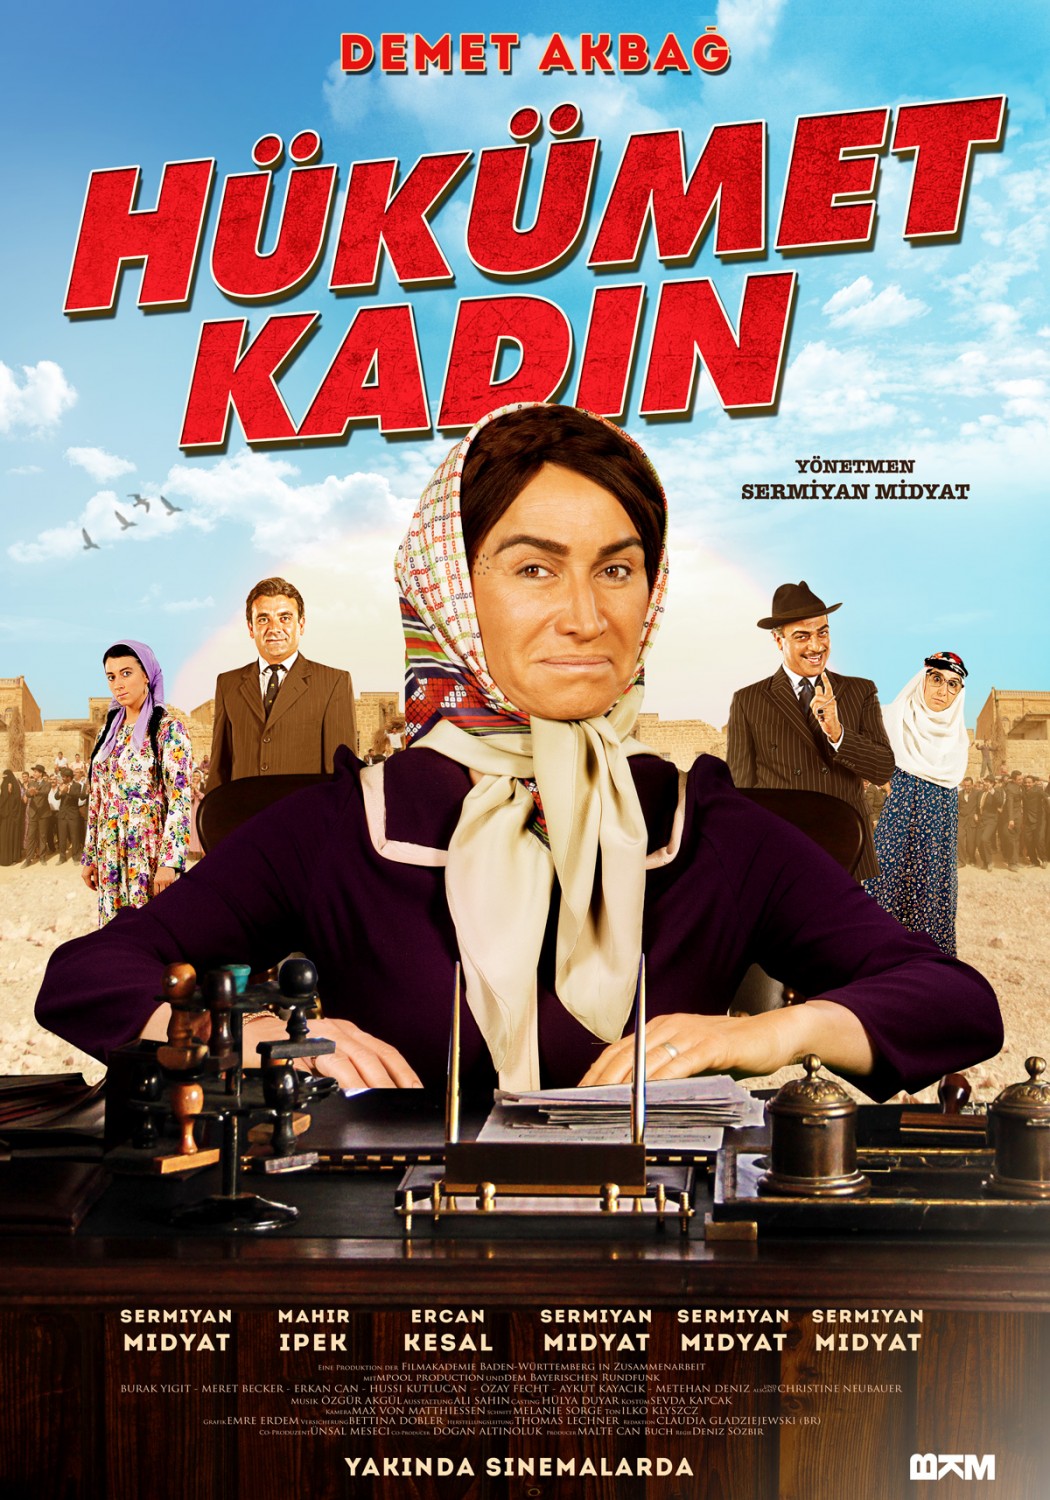 Extra Large Movie Poster Image for Hükümet kadin (#4 of 6)